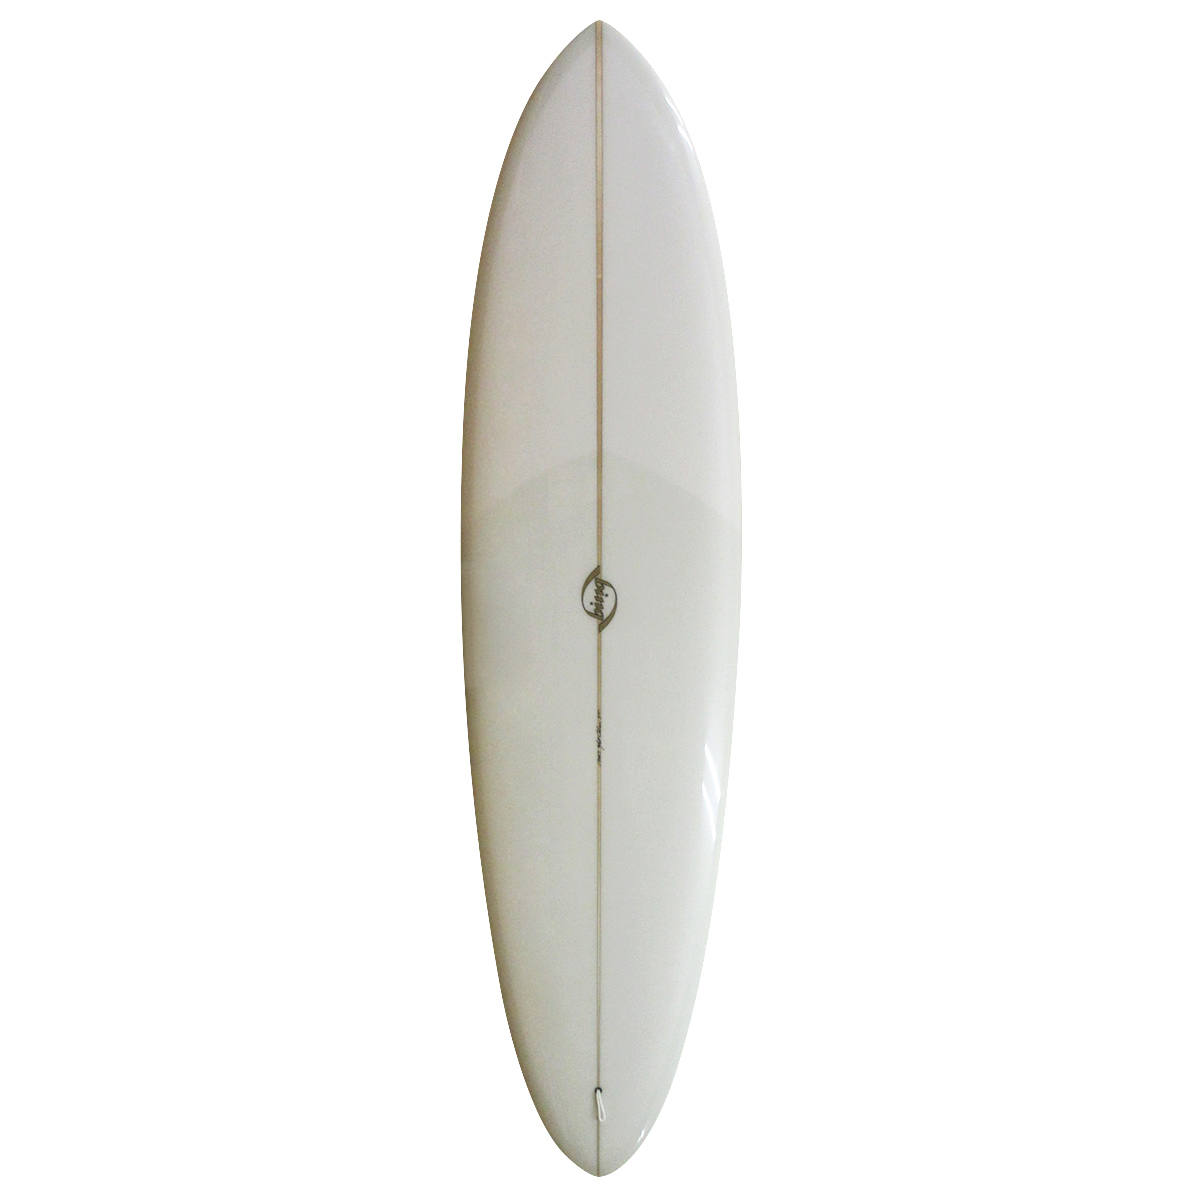 BING SURFBOARDS : ALPHA PIN